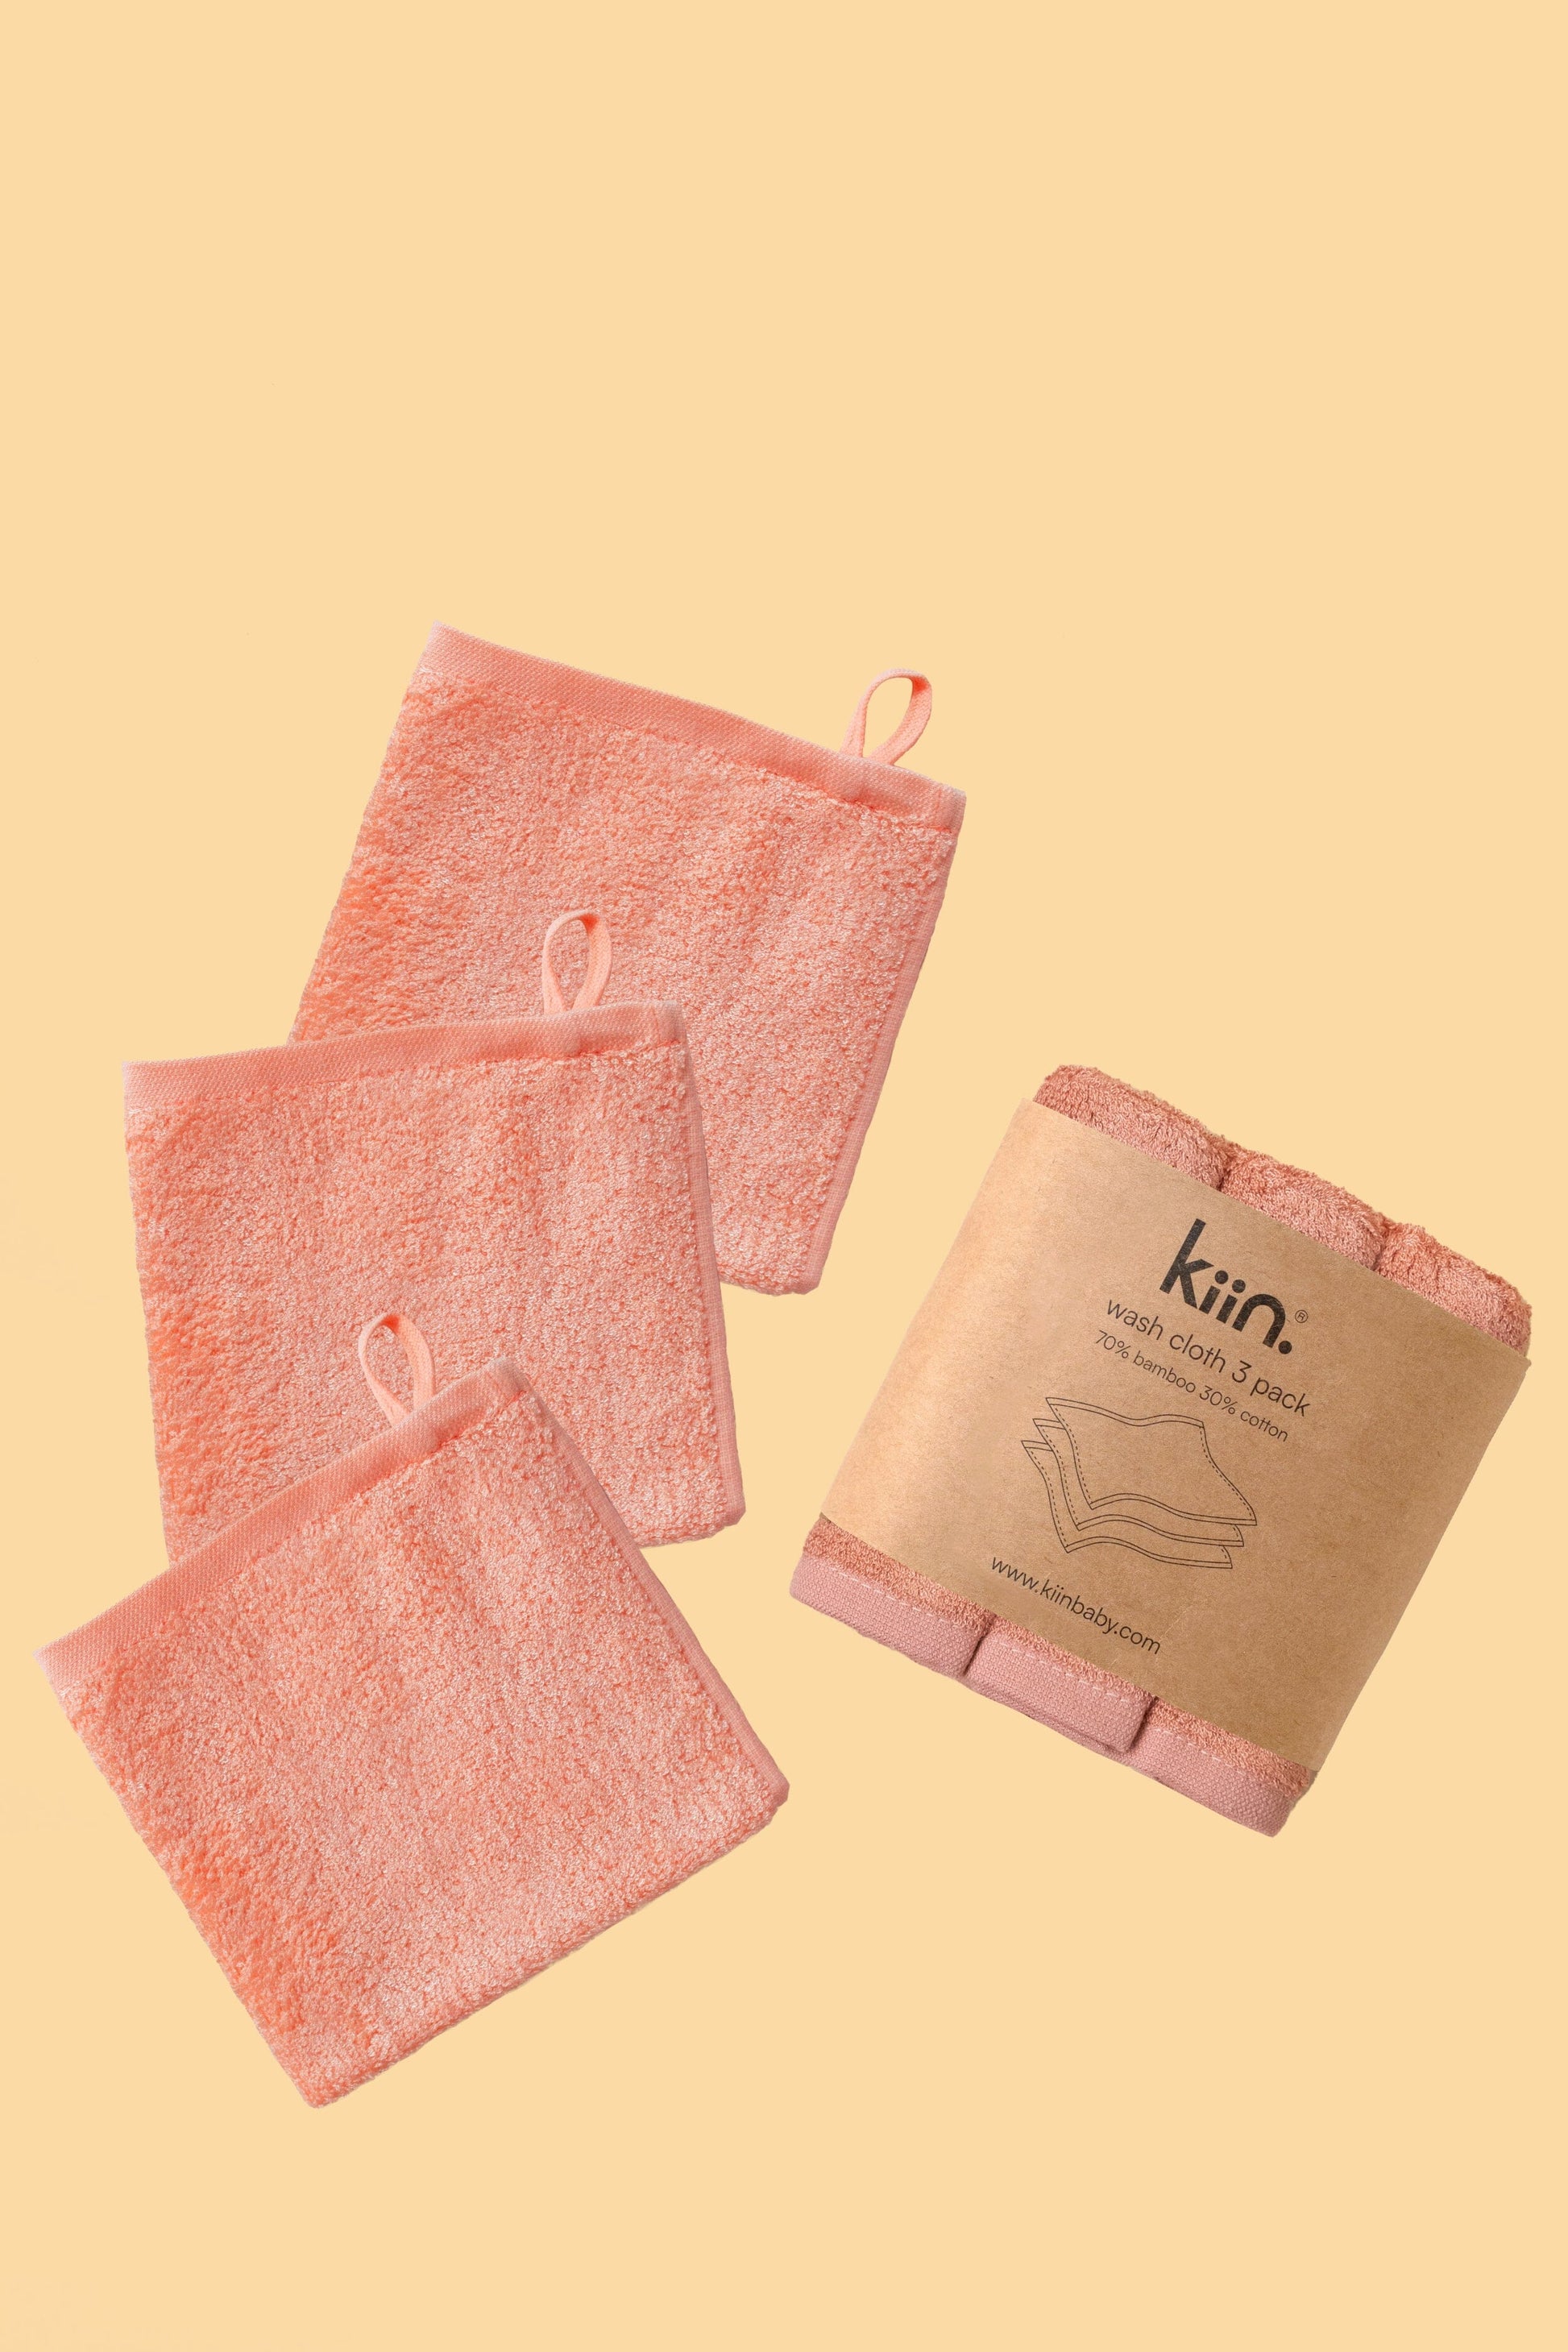 Wash Cloths 3 Pack Towels + Wash Cloths Kiin ® Blush 